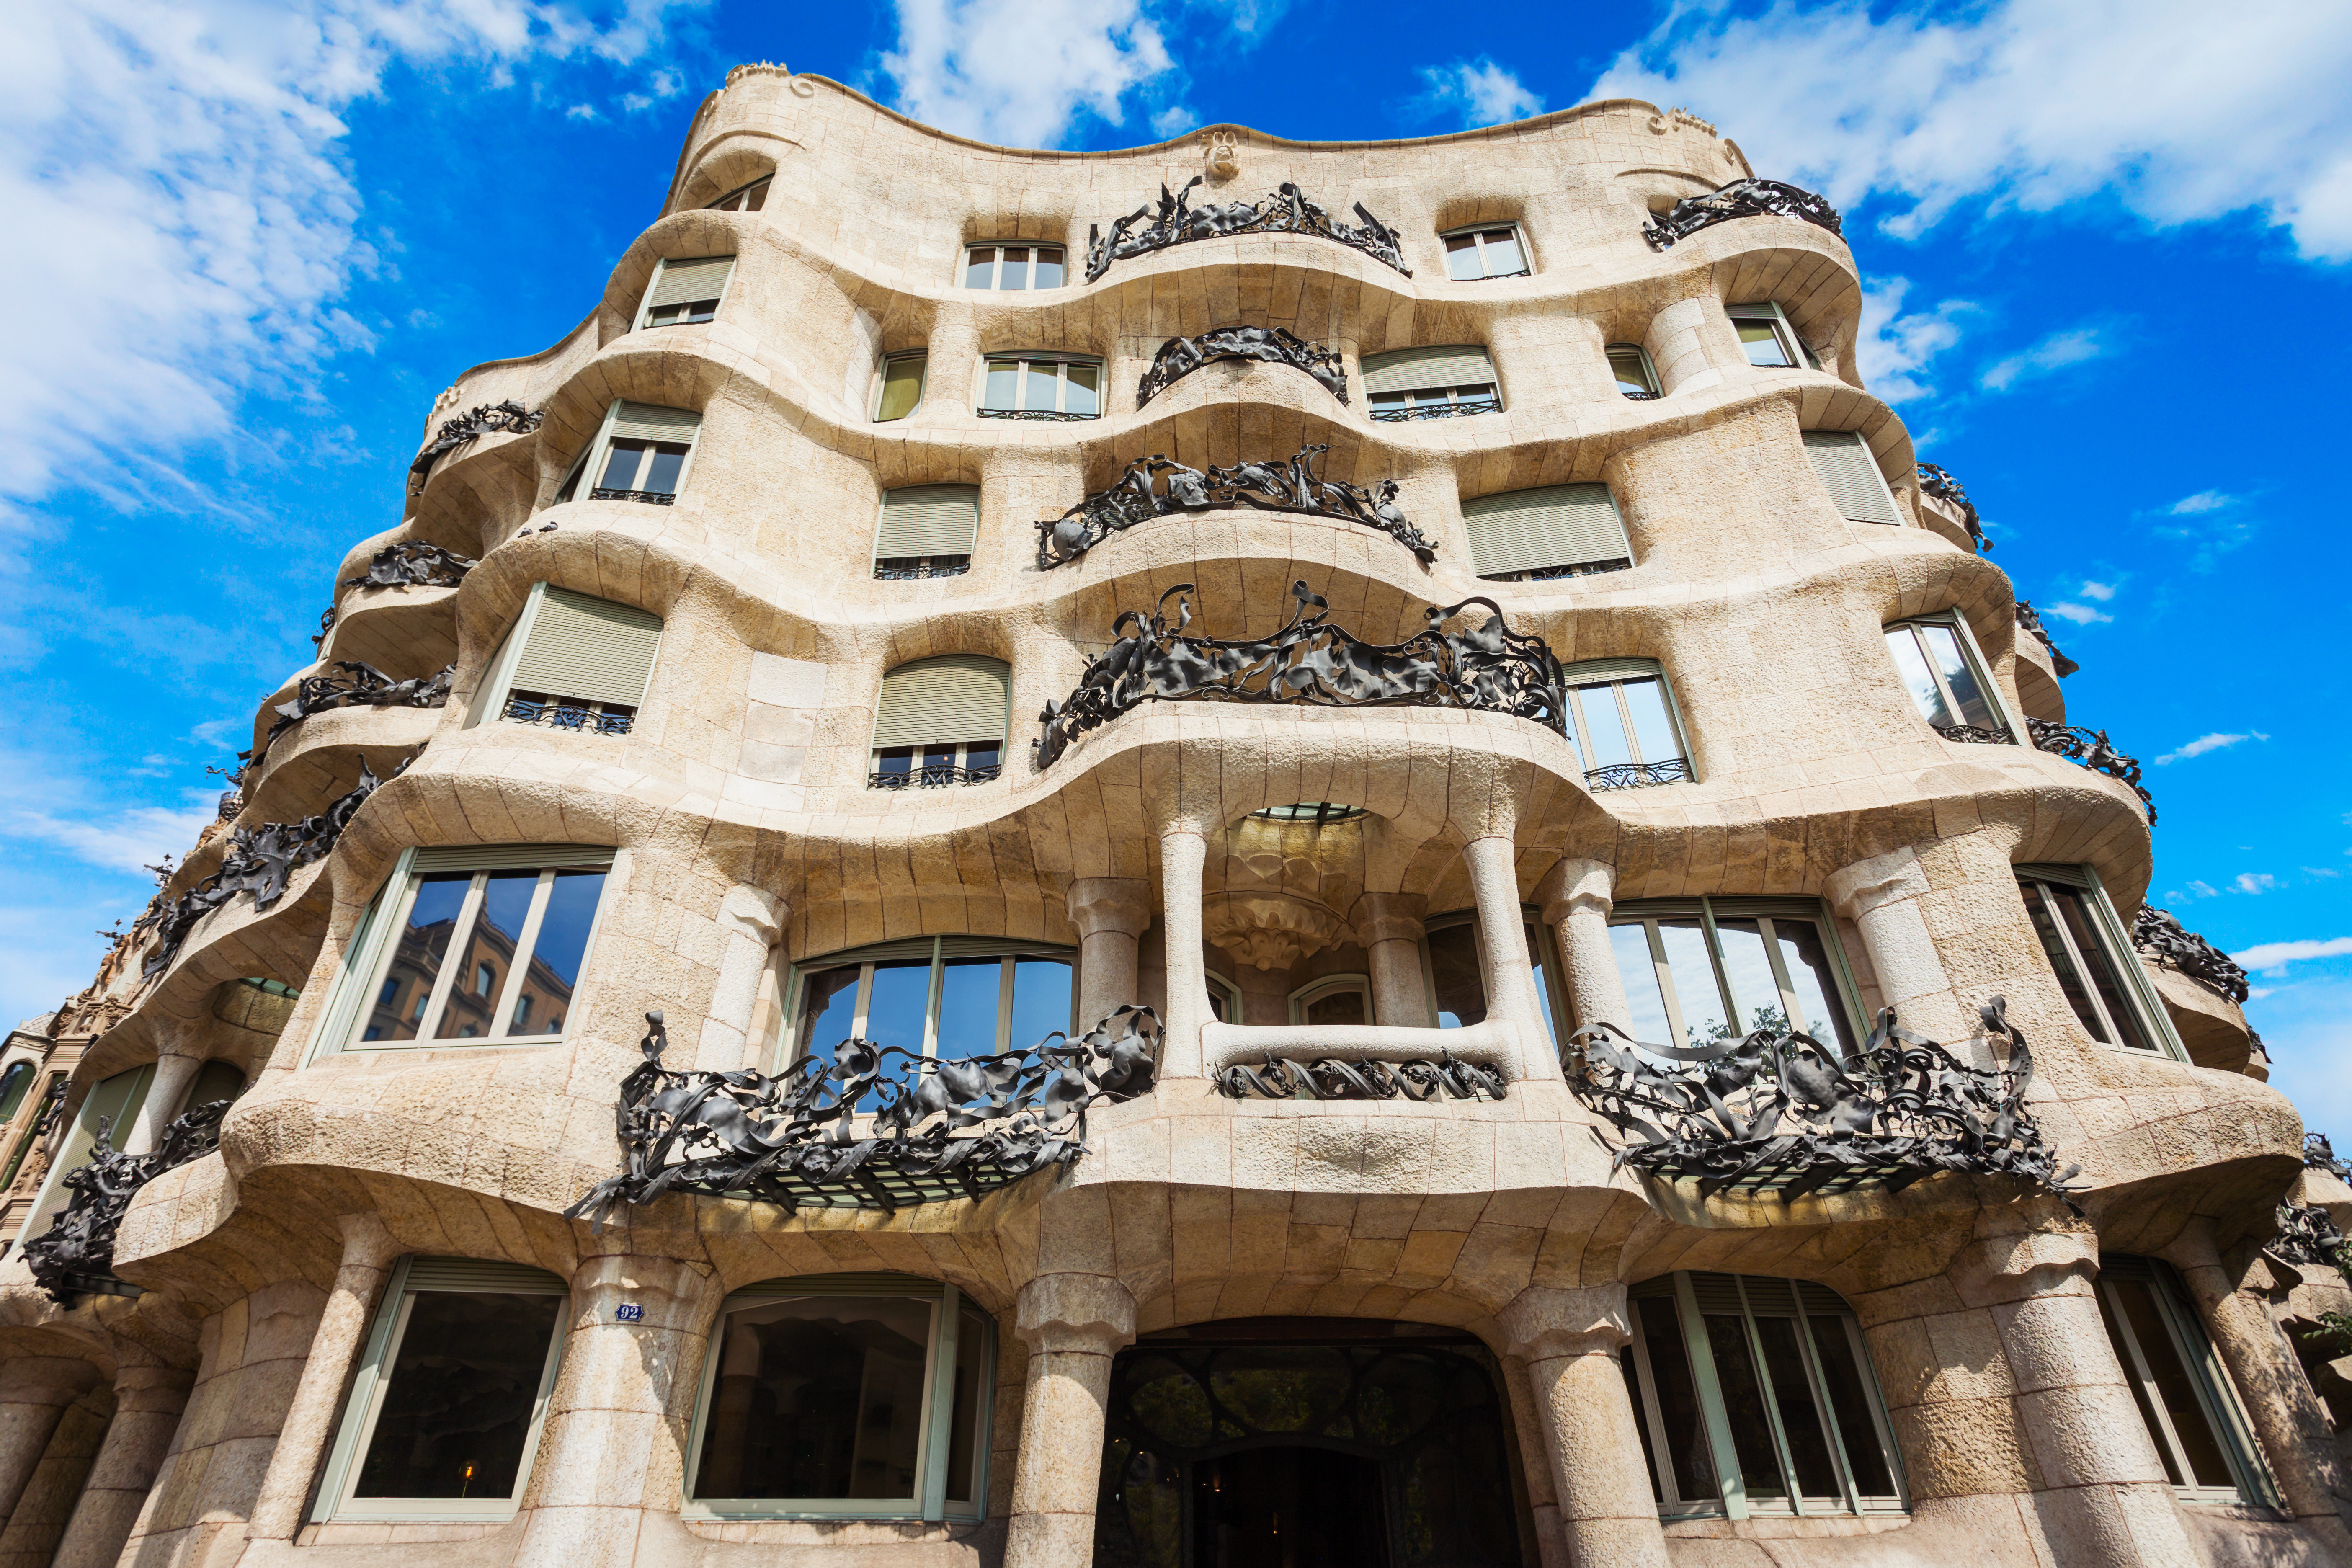  Casa Mila, designed by Antoni Gaudí